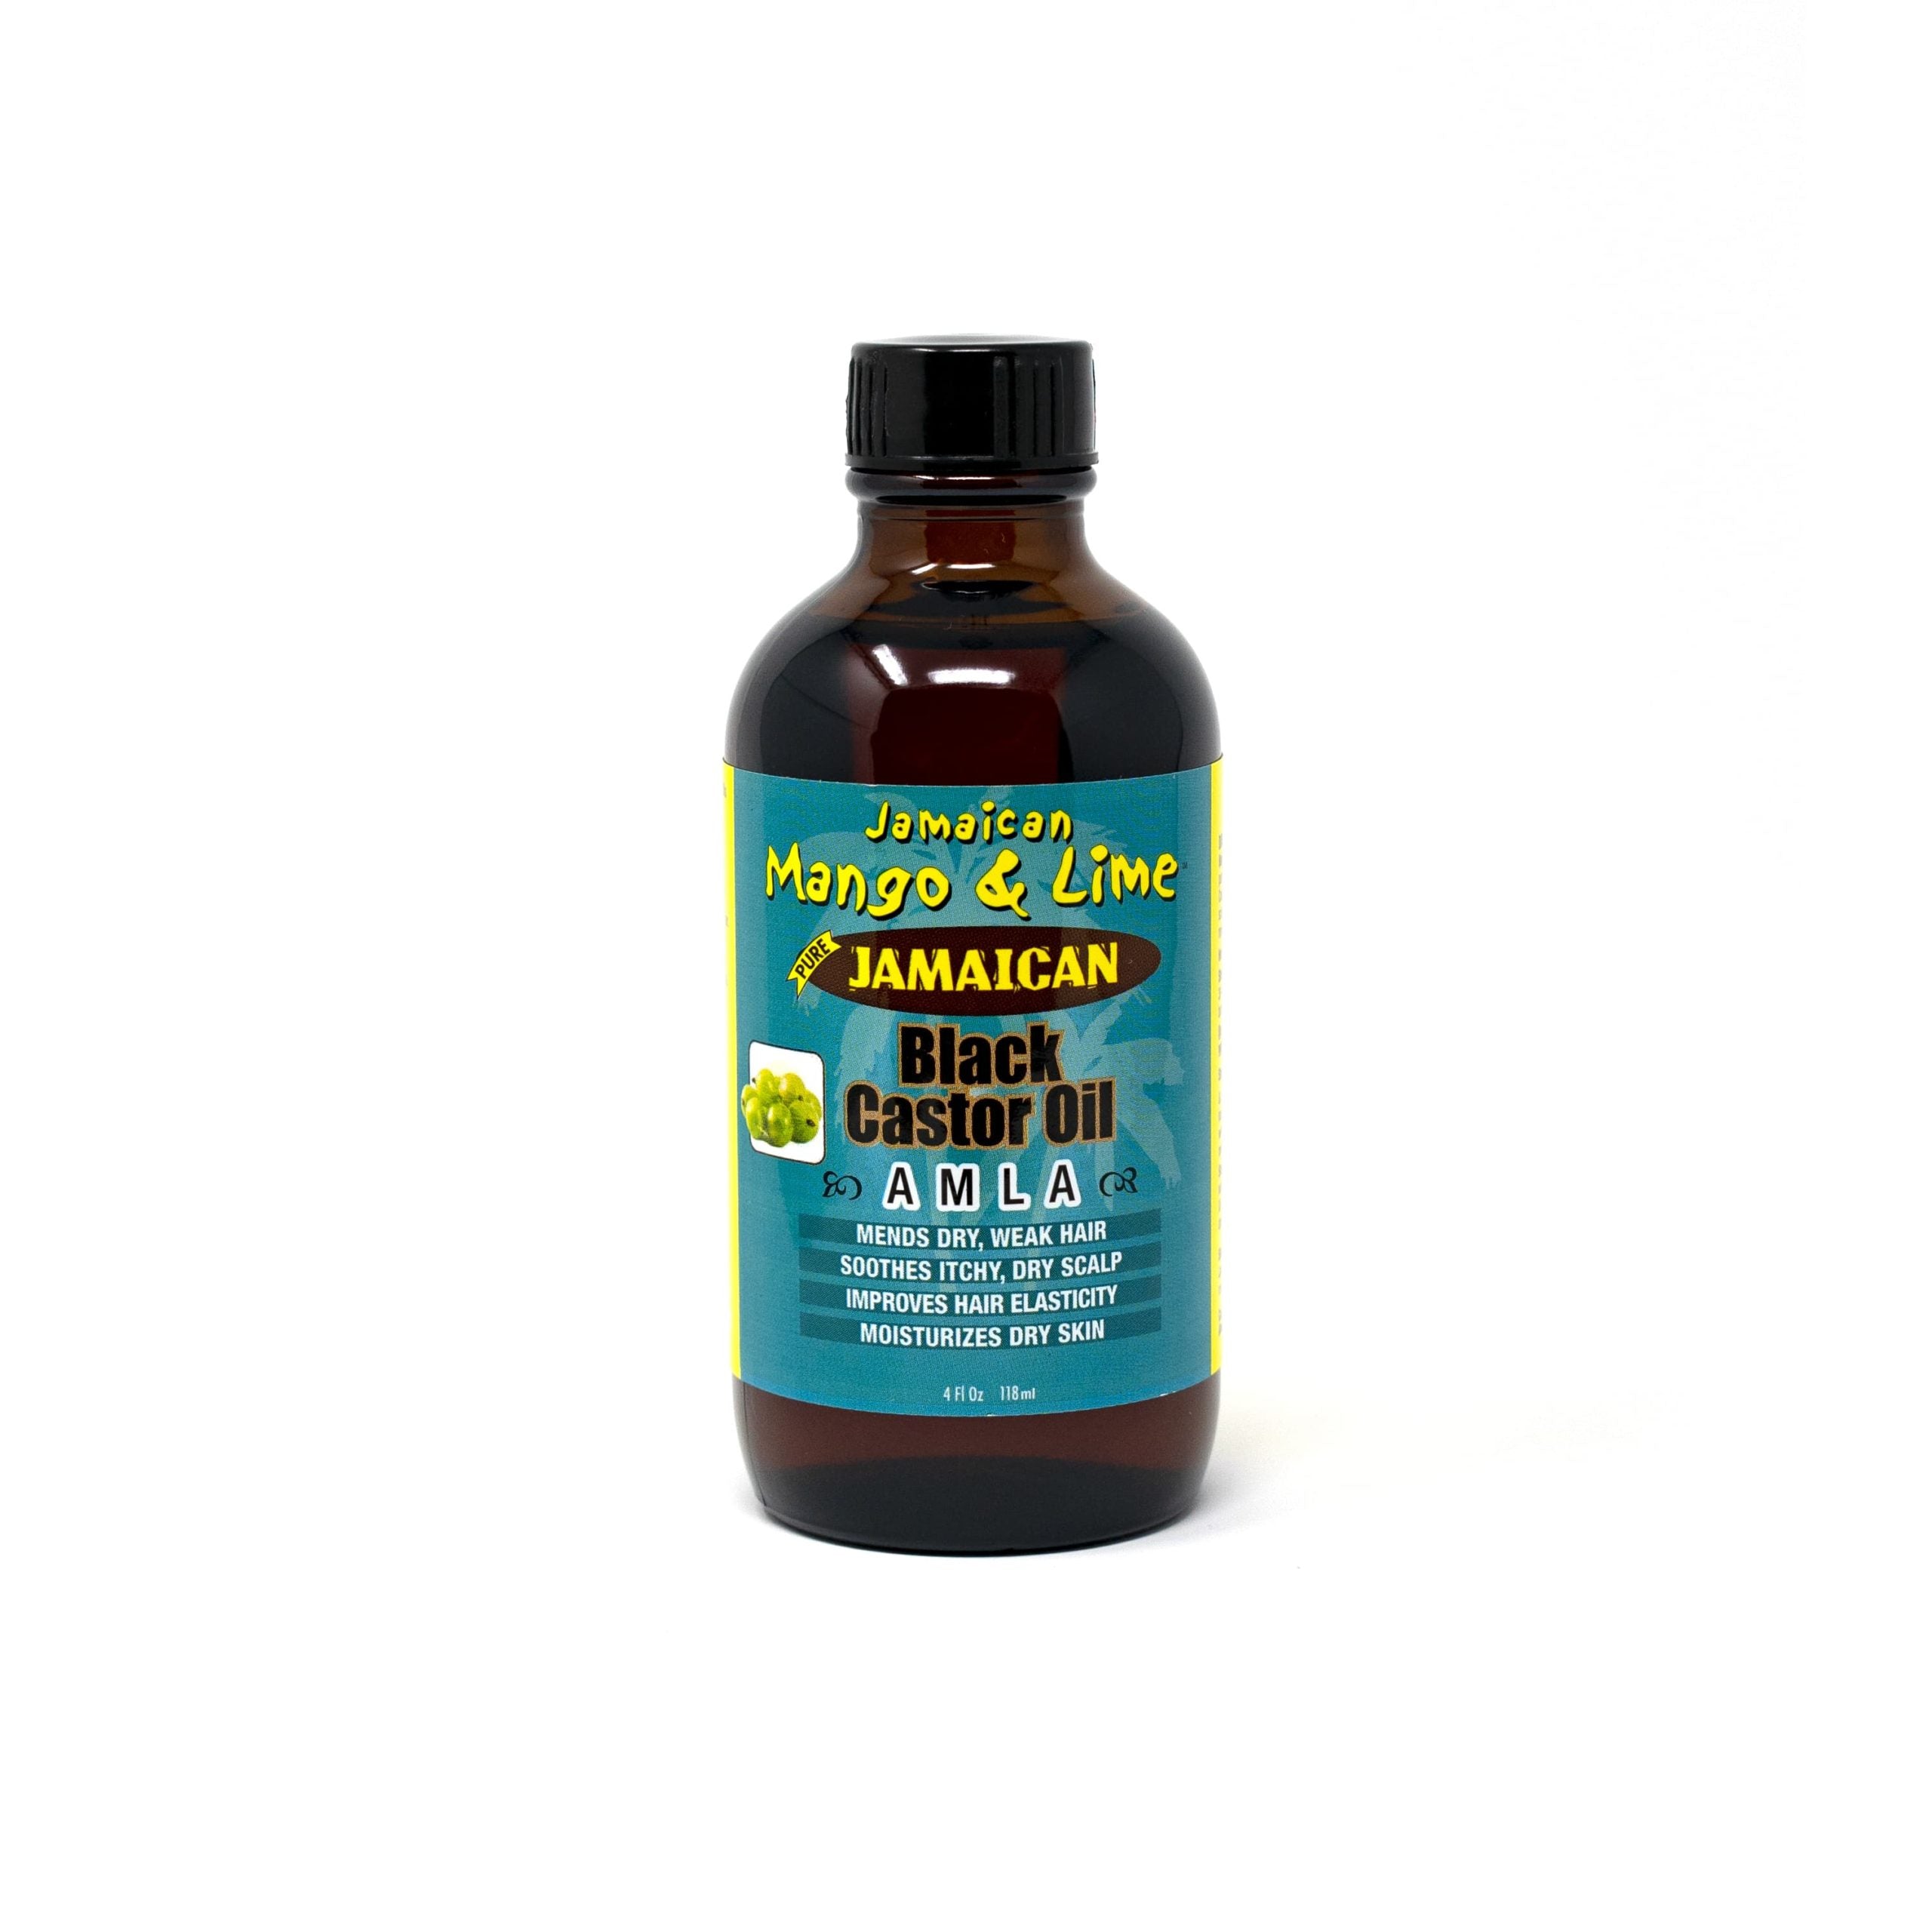 JAMAICAN MANGO & LIME Black Castor Oil Amla-Jamaican Mango & Lime- Hive Beauty Supply